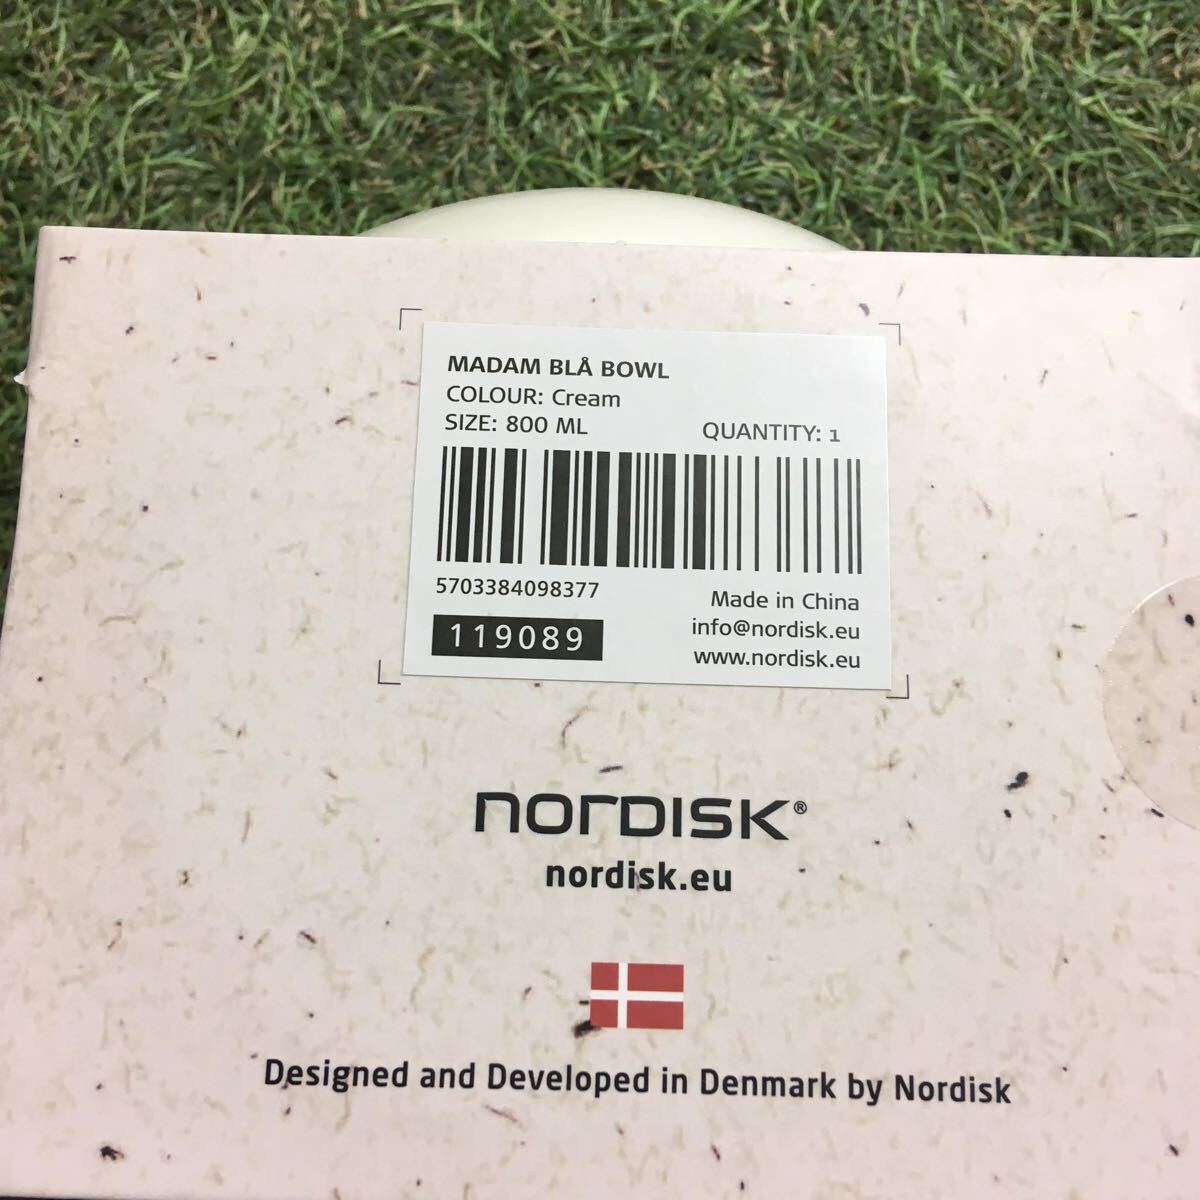 GX4697 NORDISK ノルディスク 119089 マダムブロー ボウル 800ml クリーム キャンプ アウトドア 北欧 未使用 保管品 アウトドア用品の画像6